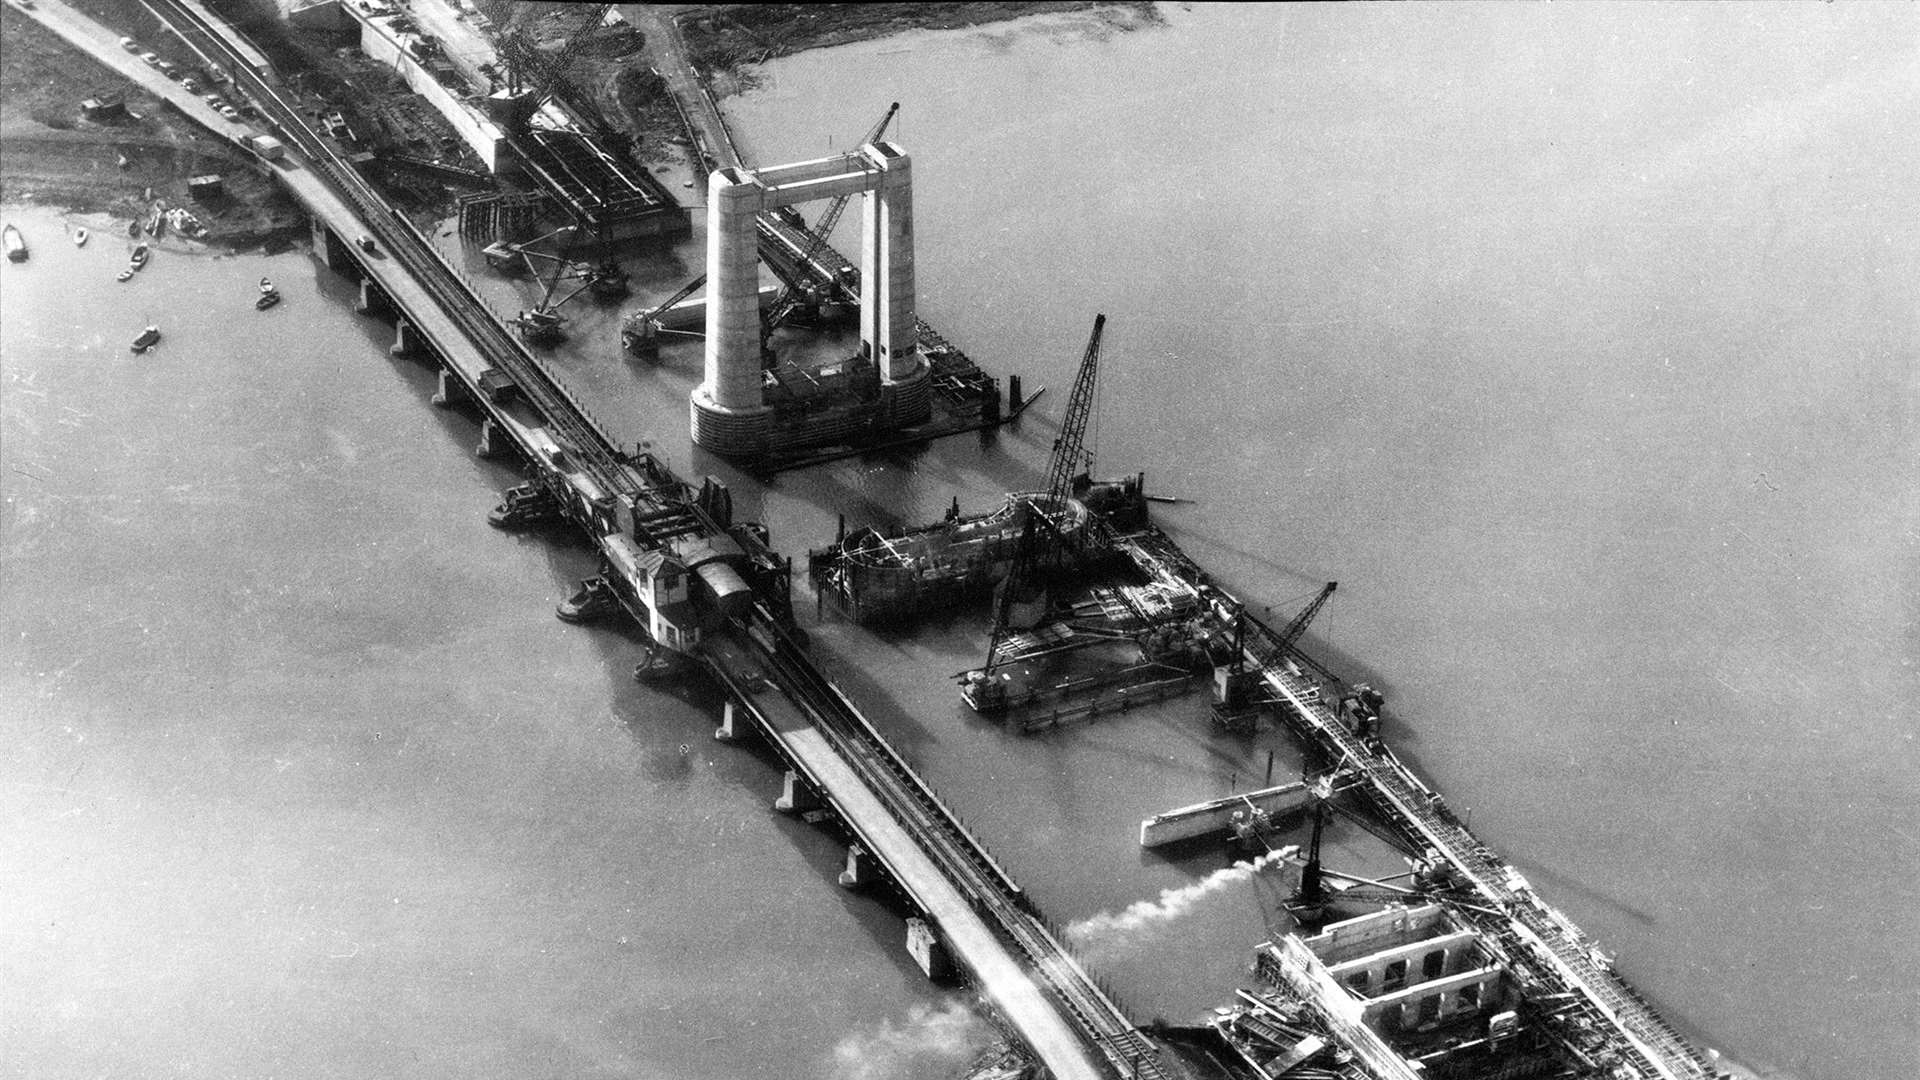 The Kingsferry Bridge under constructuion in 1959